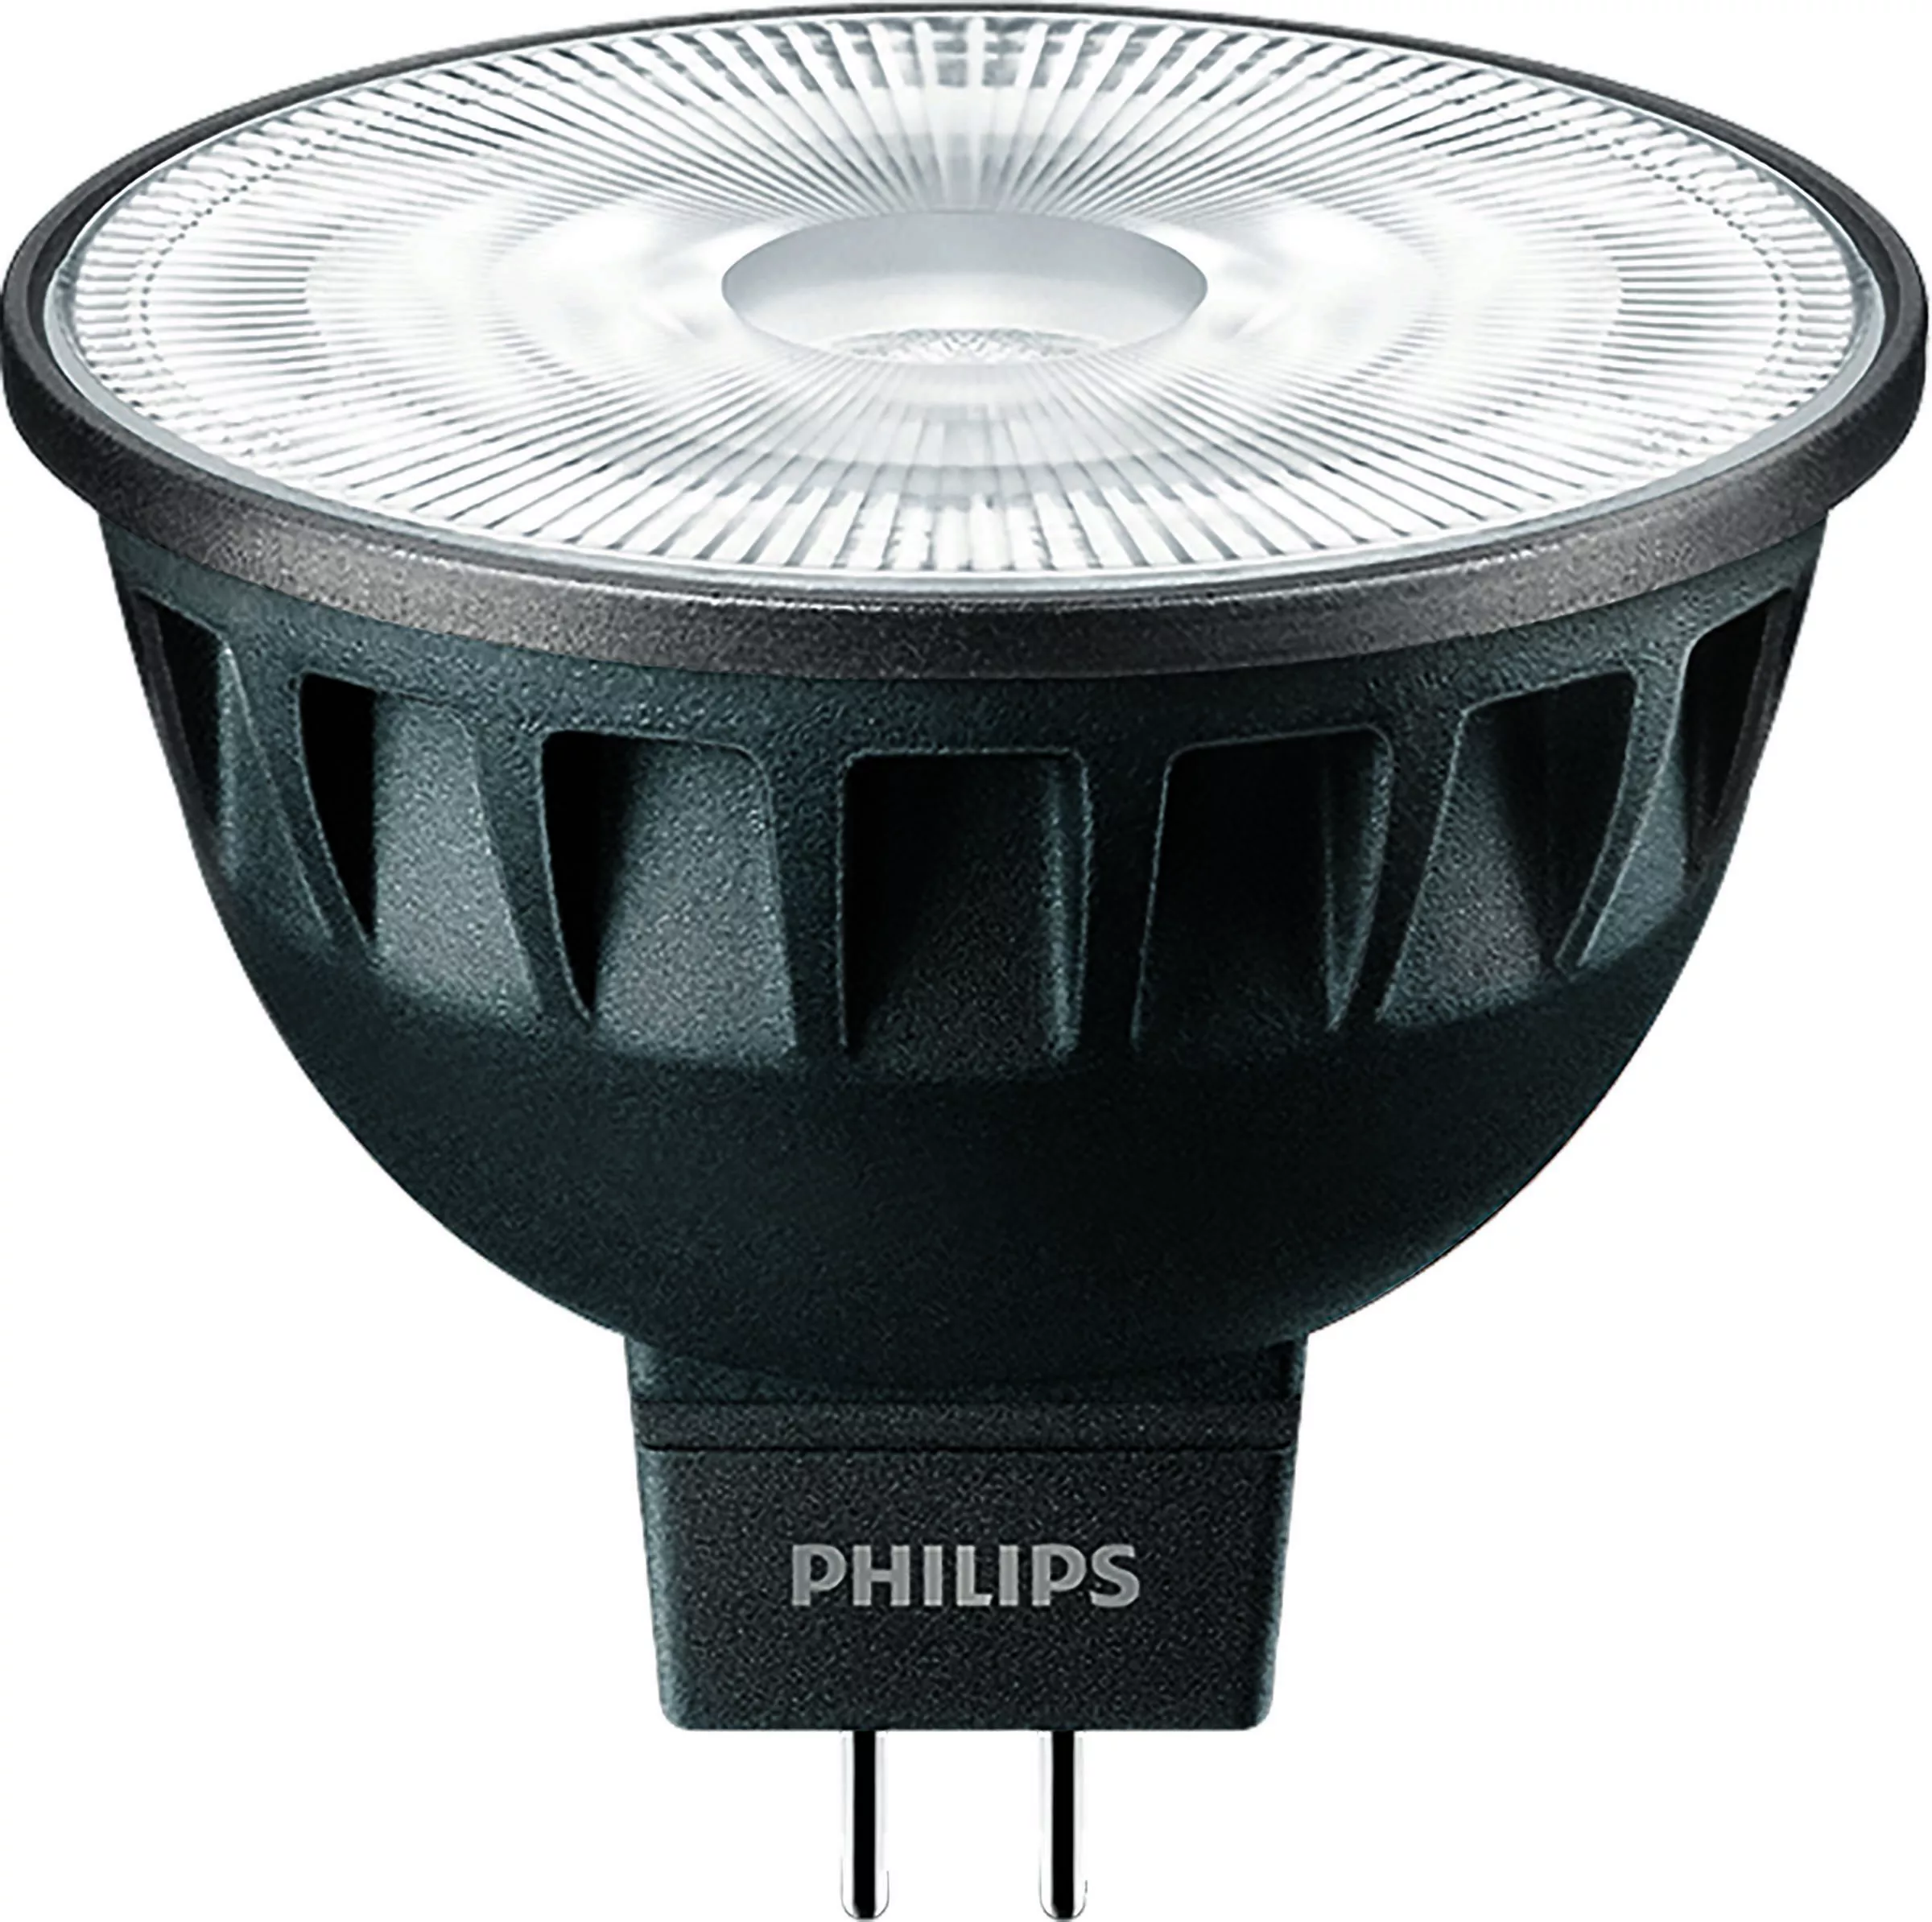 Philips Lighting LED-Reflektorlampr MR16 GU5.3 940 DIM MAS LED Exp#35863800 günstig online kaufen